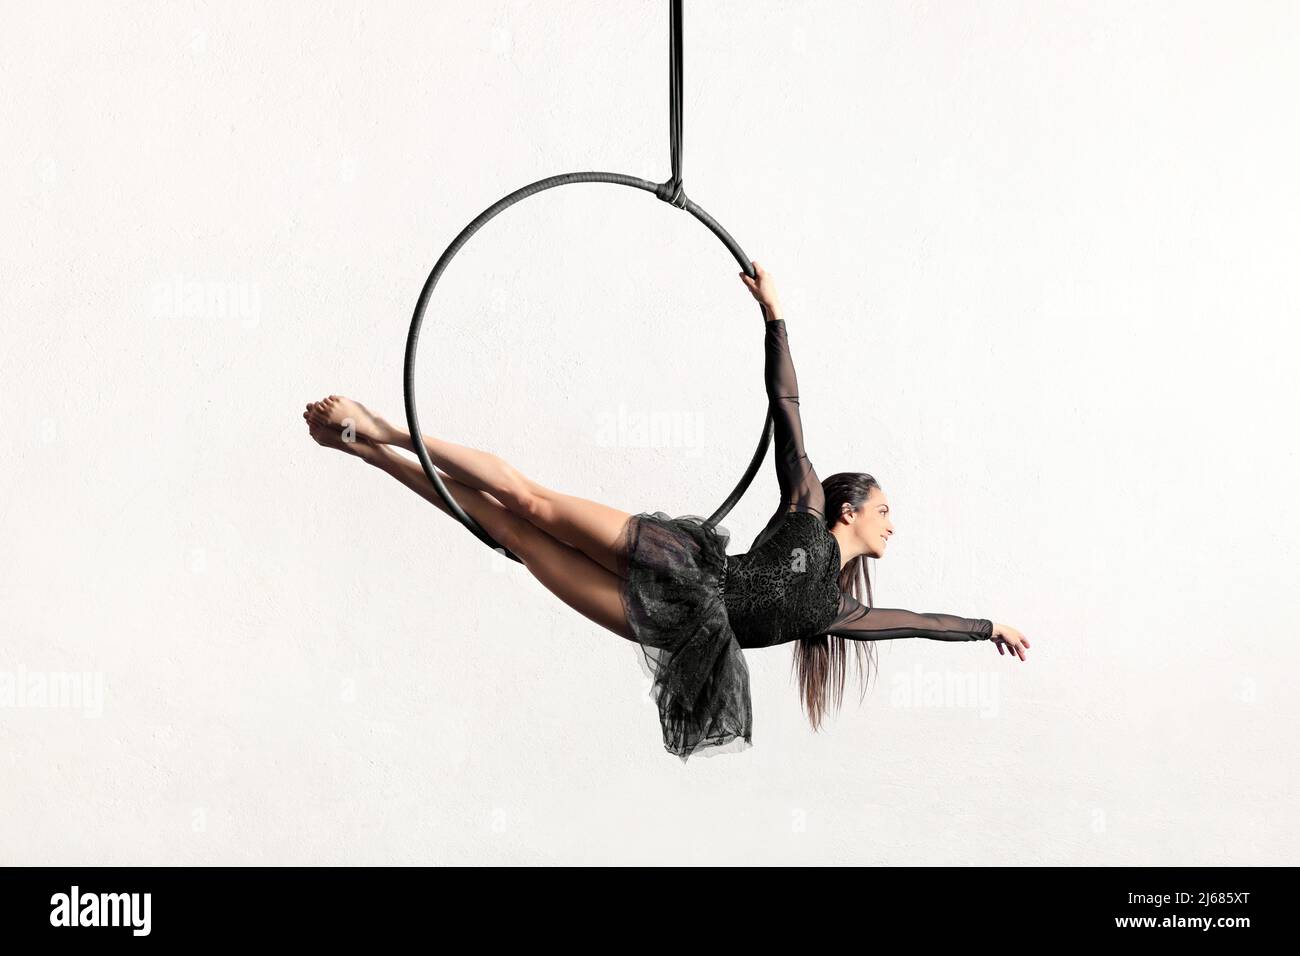 Full body of active barefoot female gymnast doing siren pose on hanging aerial hoop or lyra against white background in light studio Stock Photo